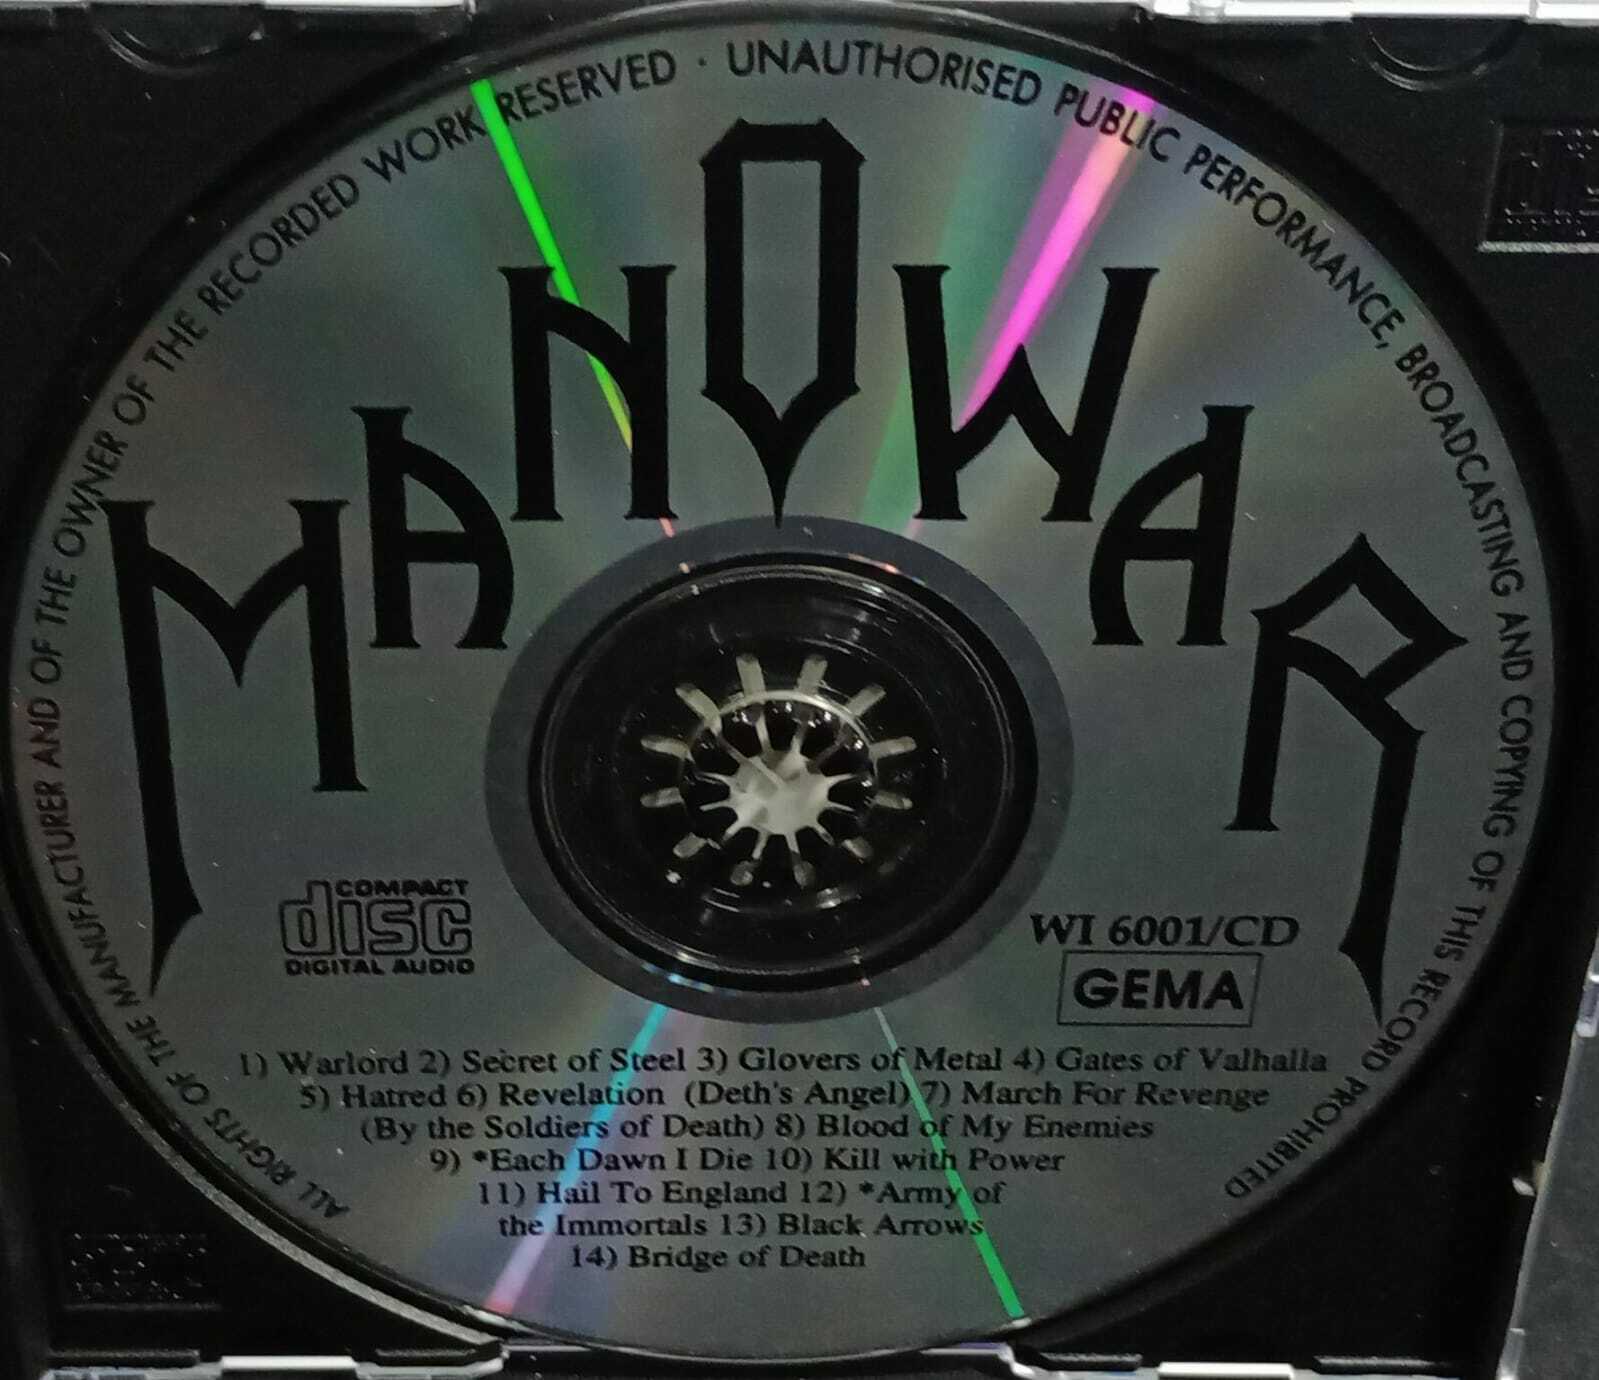 CD - Manowar - Into Glory Ride / Hail To England (usa)